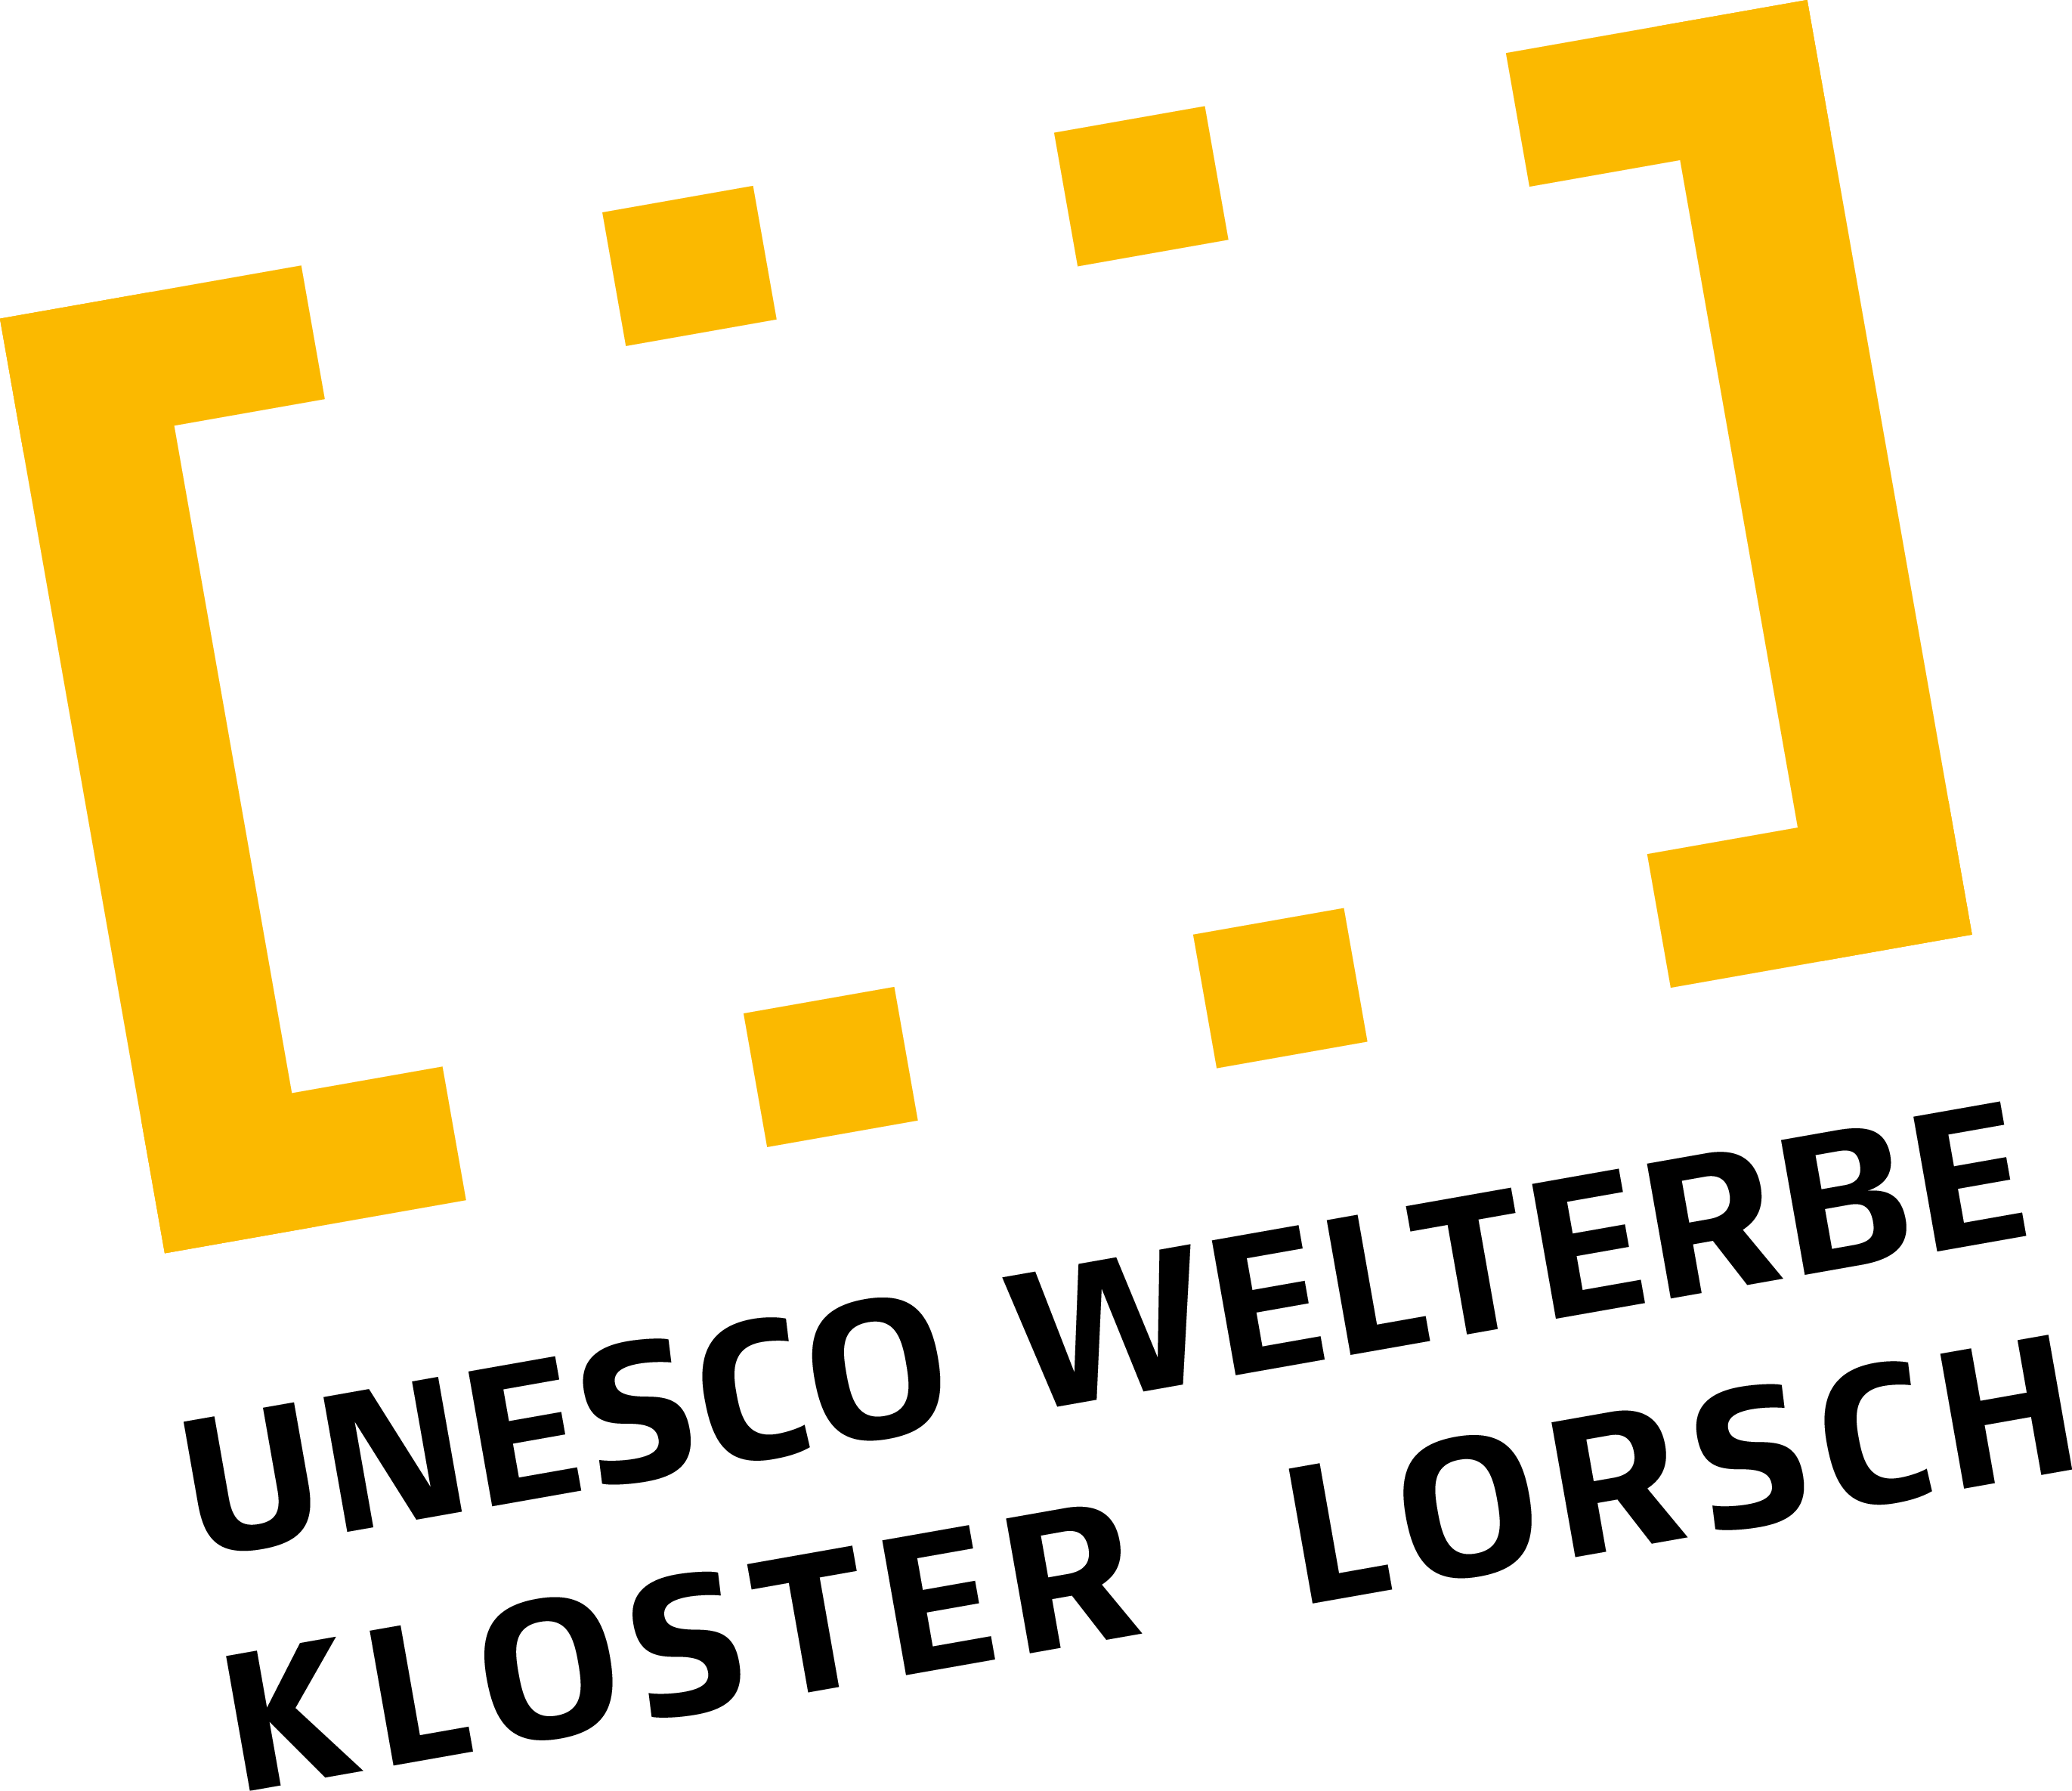 UNESCO WELTERBE